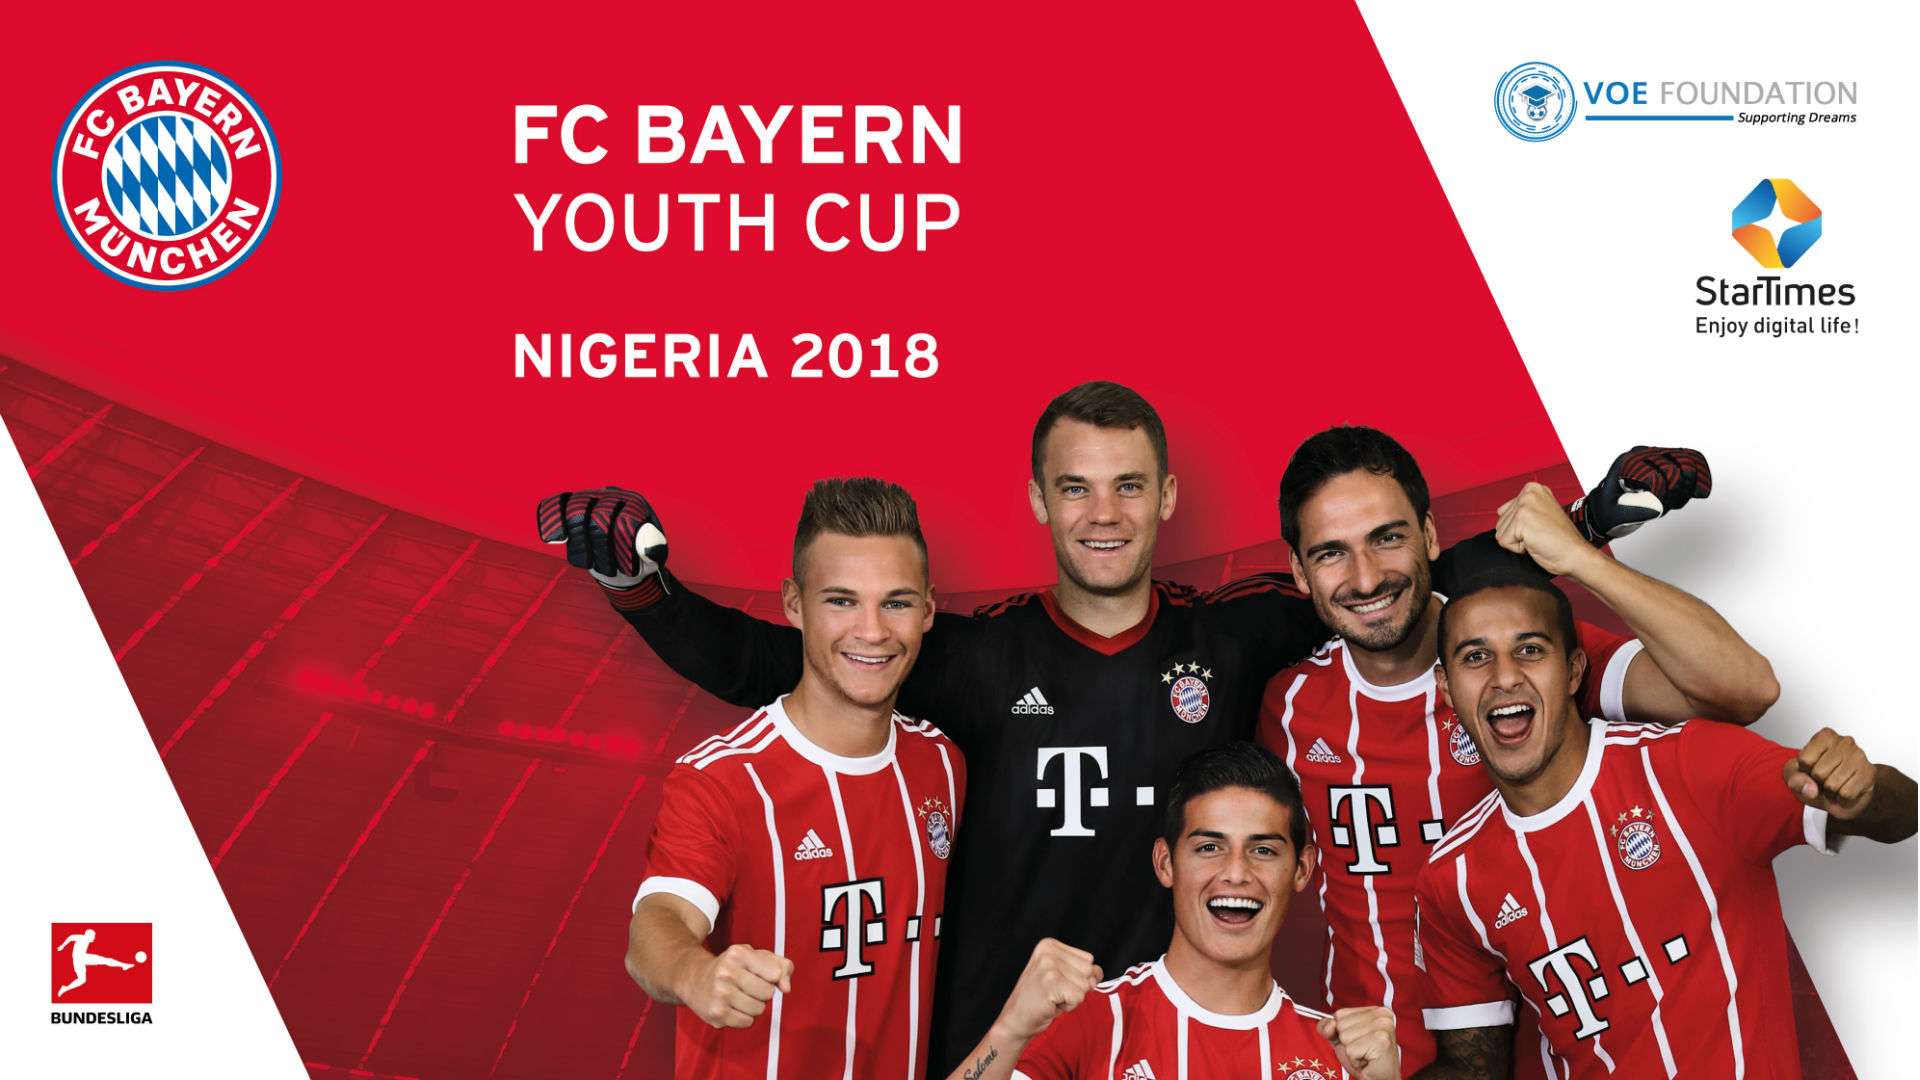 Bayern Youth Cup